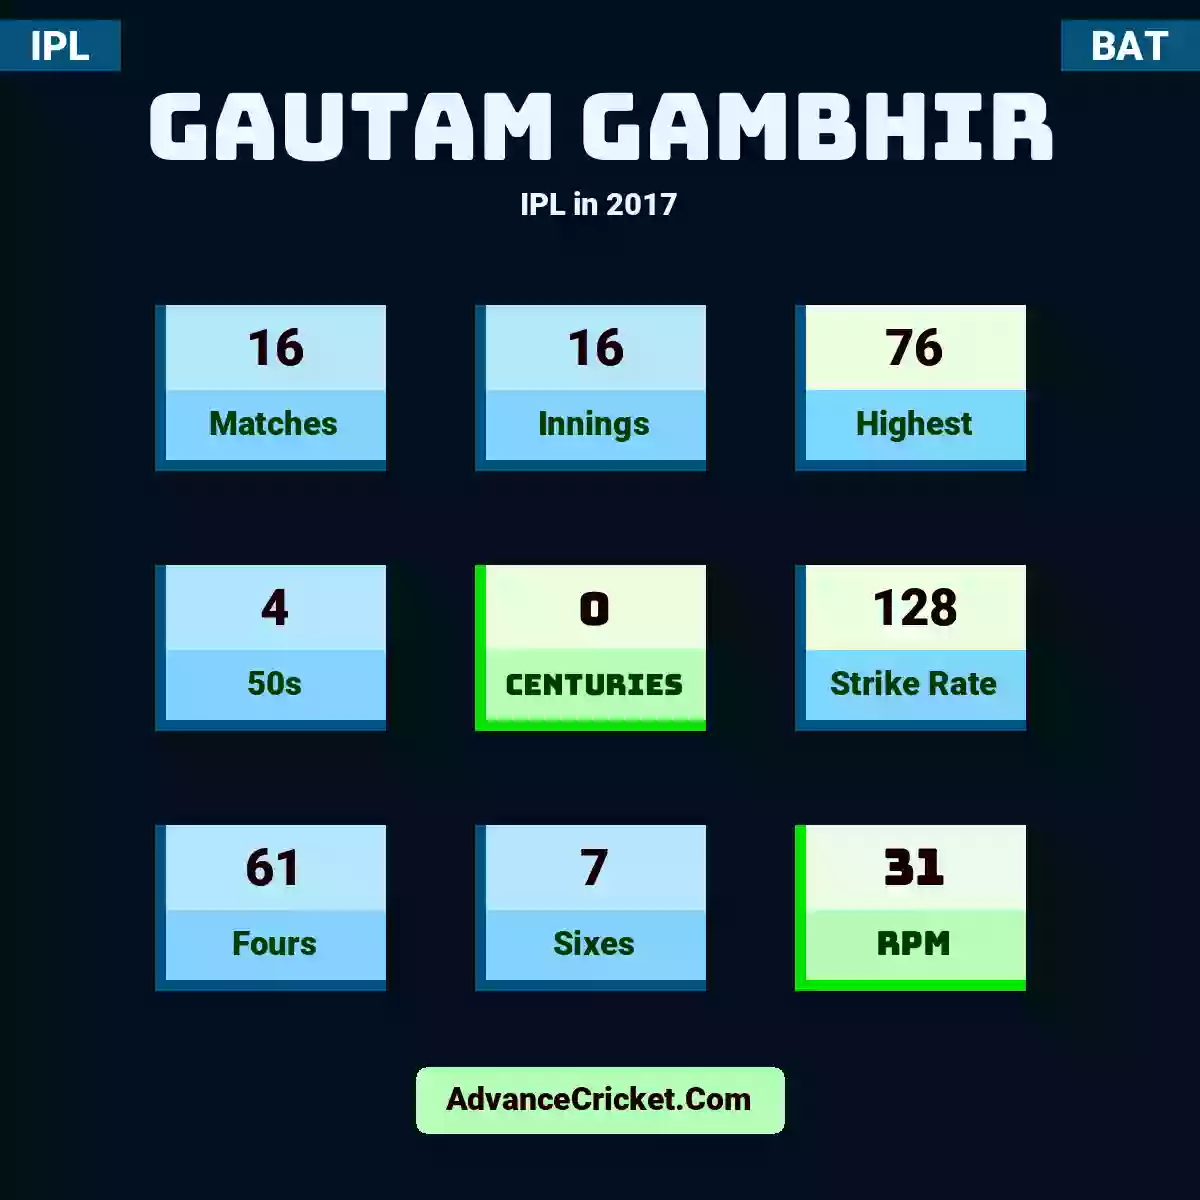 Gautam Gambhir IPL  in 2017, Gautam Gambhir played 16 matches, scored 76 runs as highest, 4 half-centuries, and 0 centuries, with a strike rate of 128. G.Gambhir hit 61 fours and 7 sixes, with an RPM of 31.